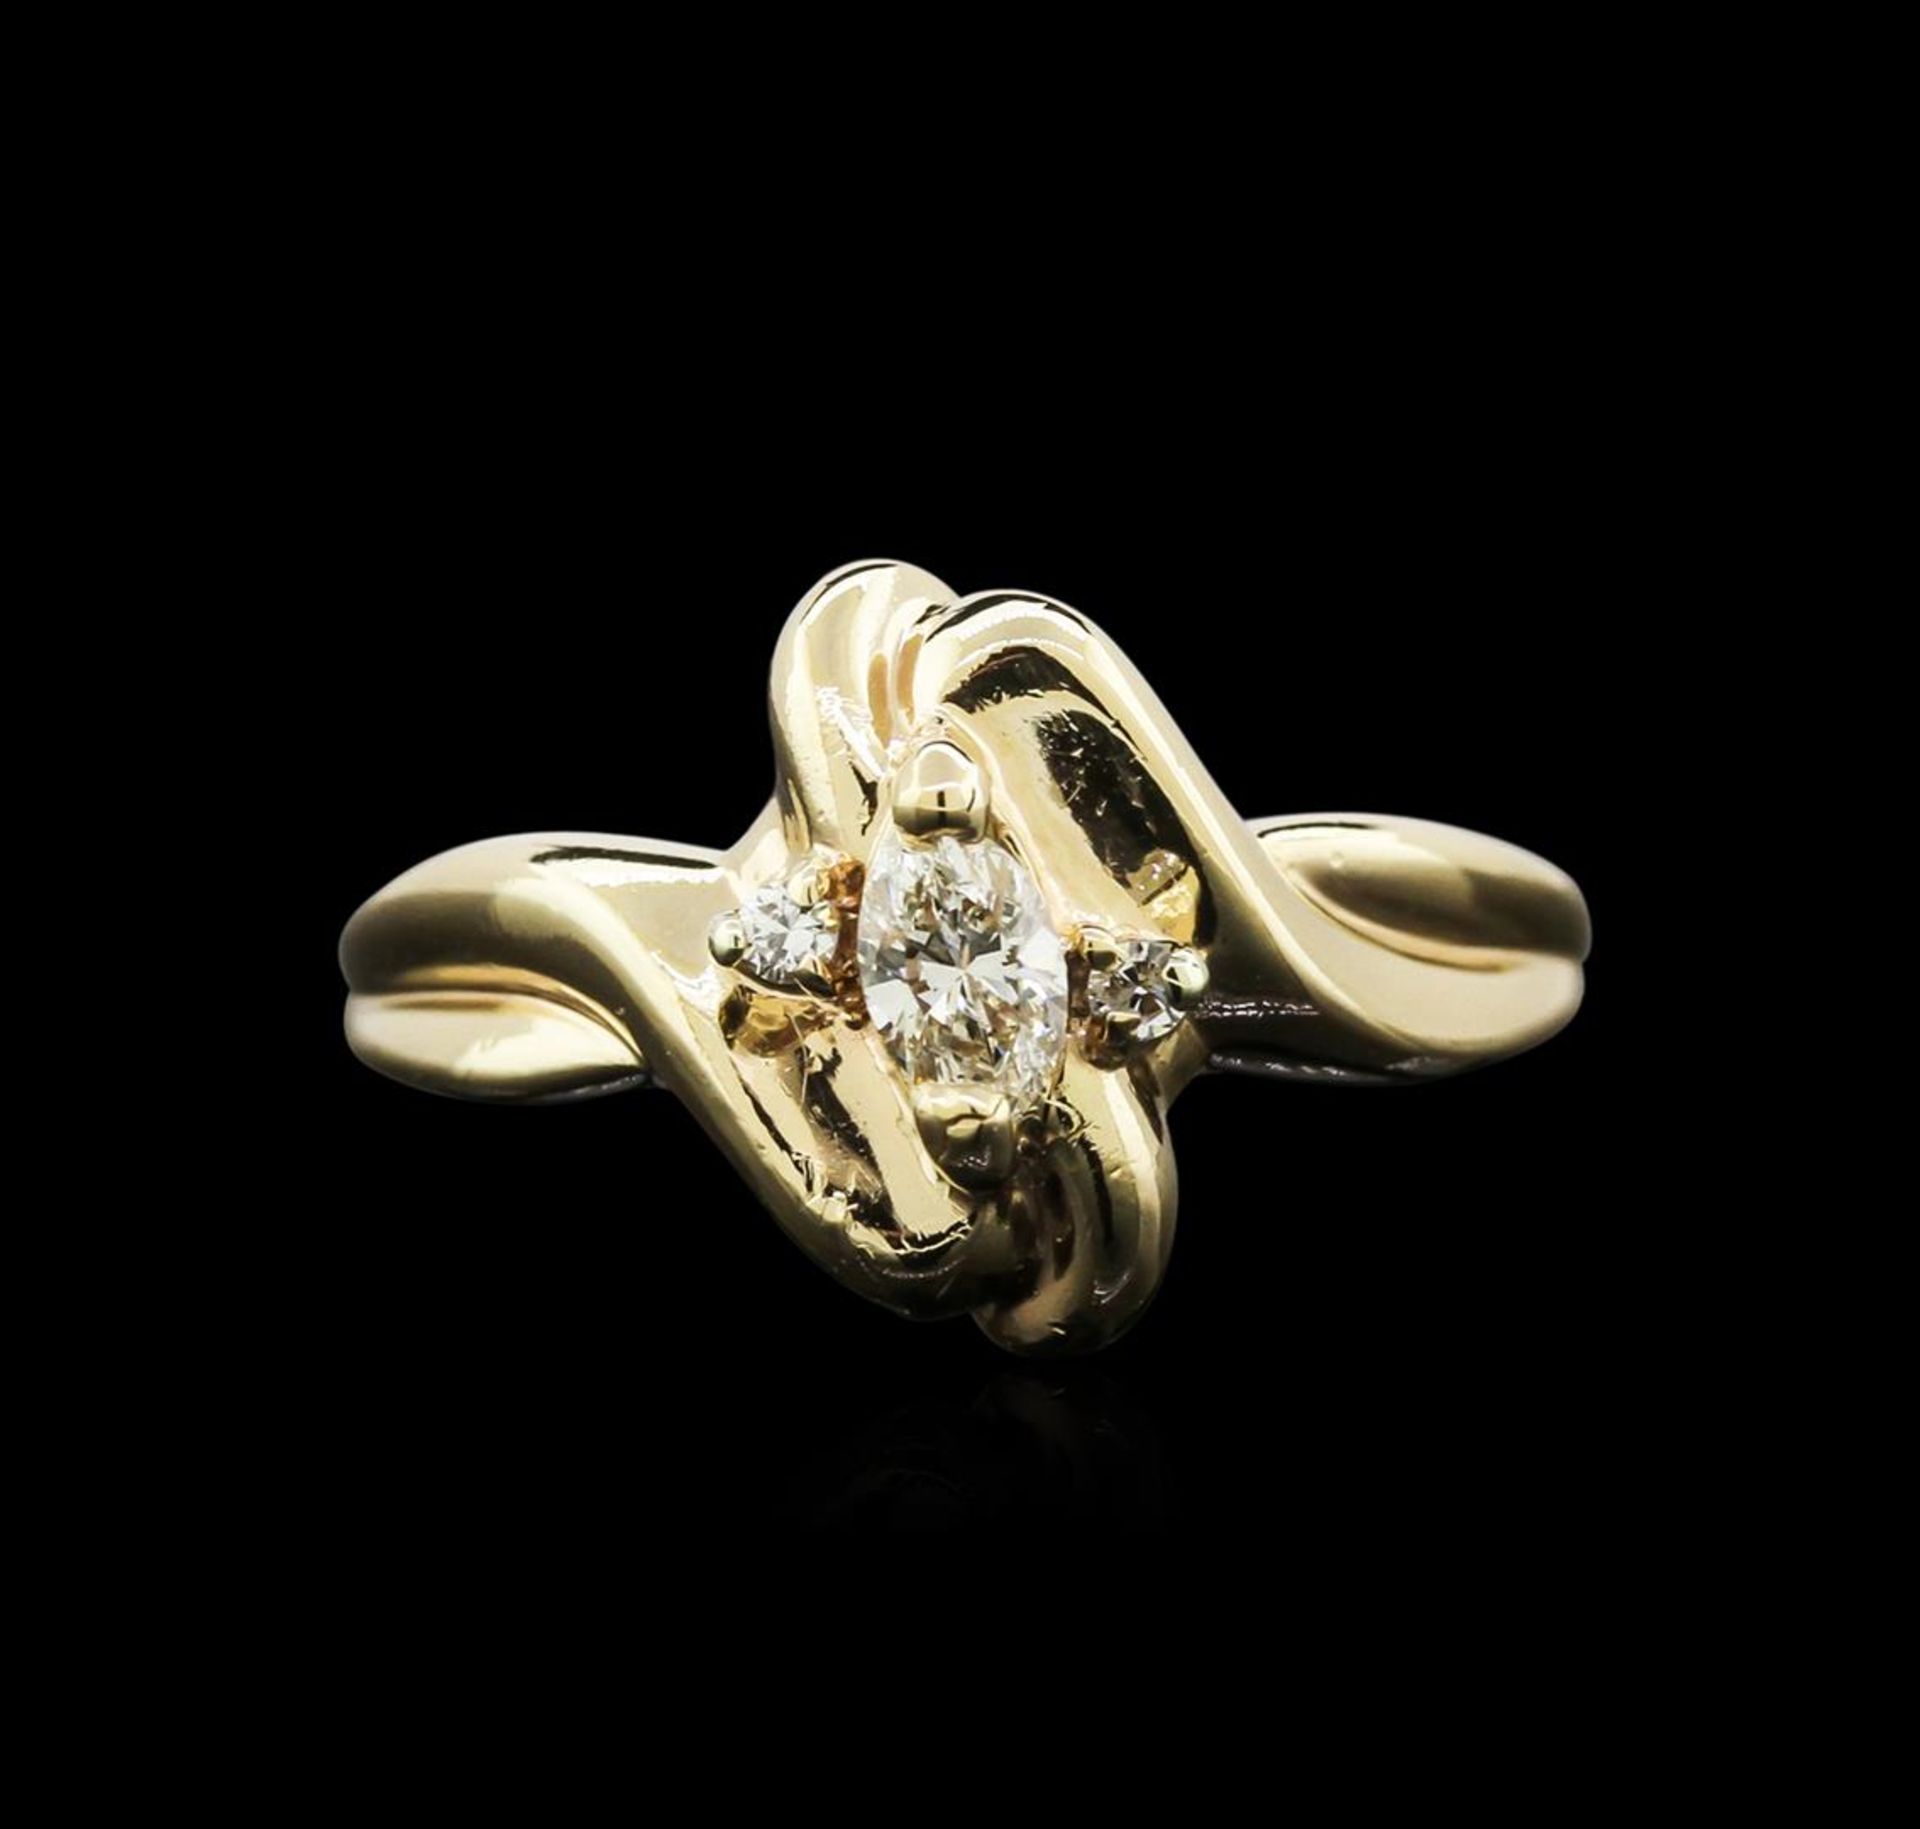 0.30 ctw Diamond Ring - 14KT Yellow Gold - Image 2 of 4